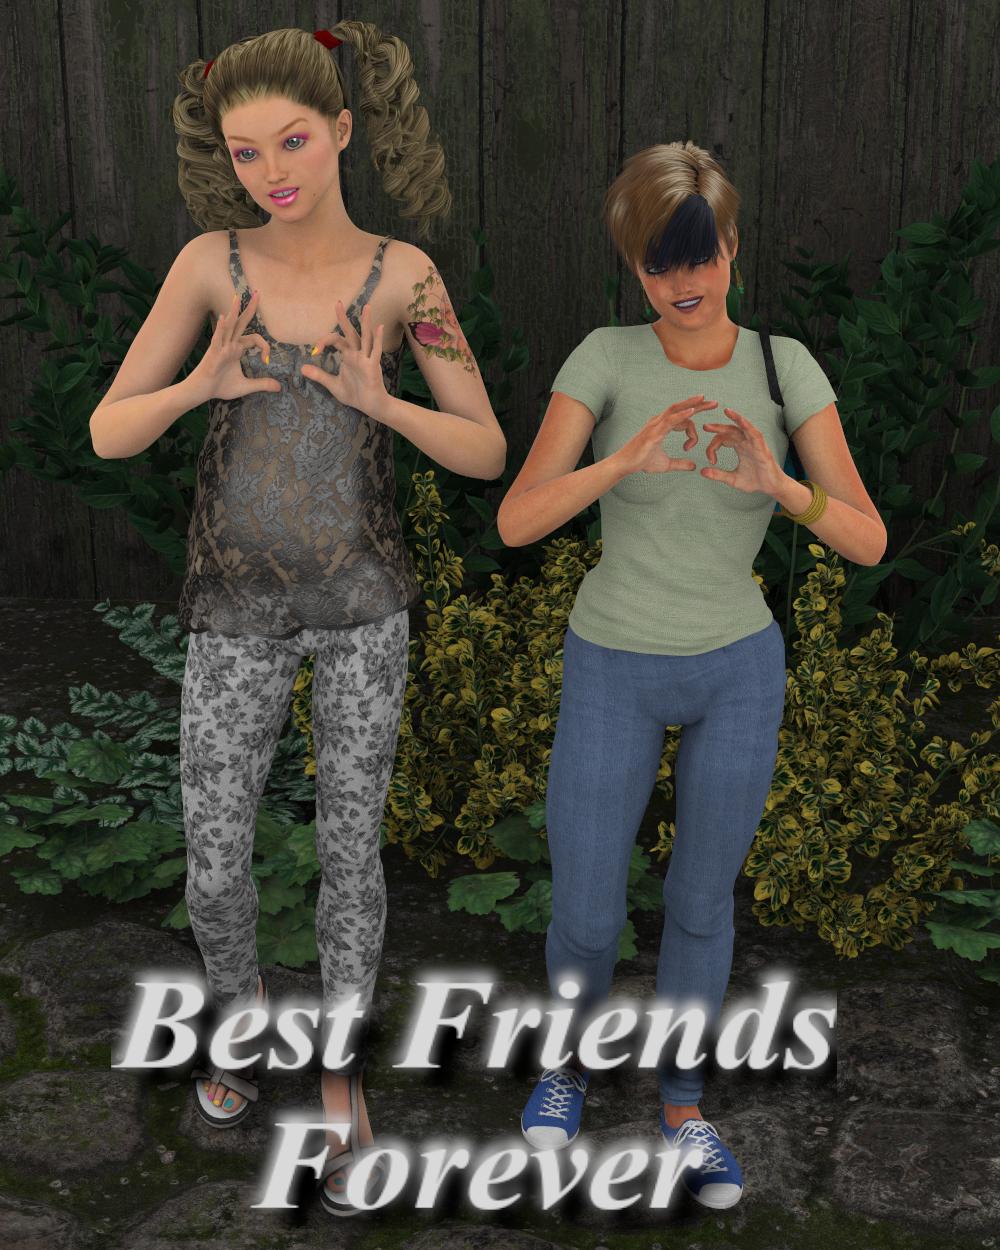 3D Art Freebie Challenge-August 2019-"Best Friends Forever" -Entries